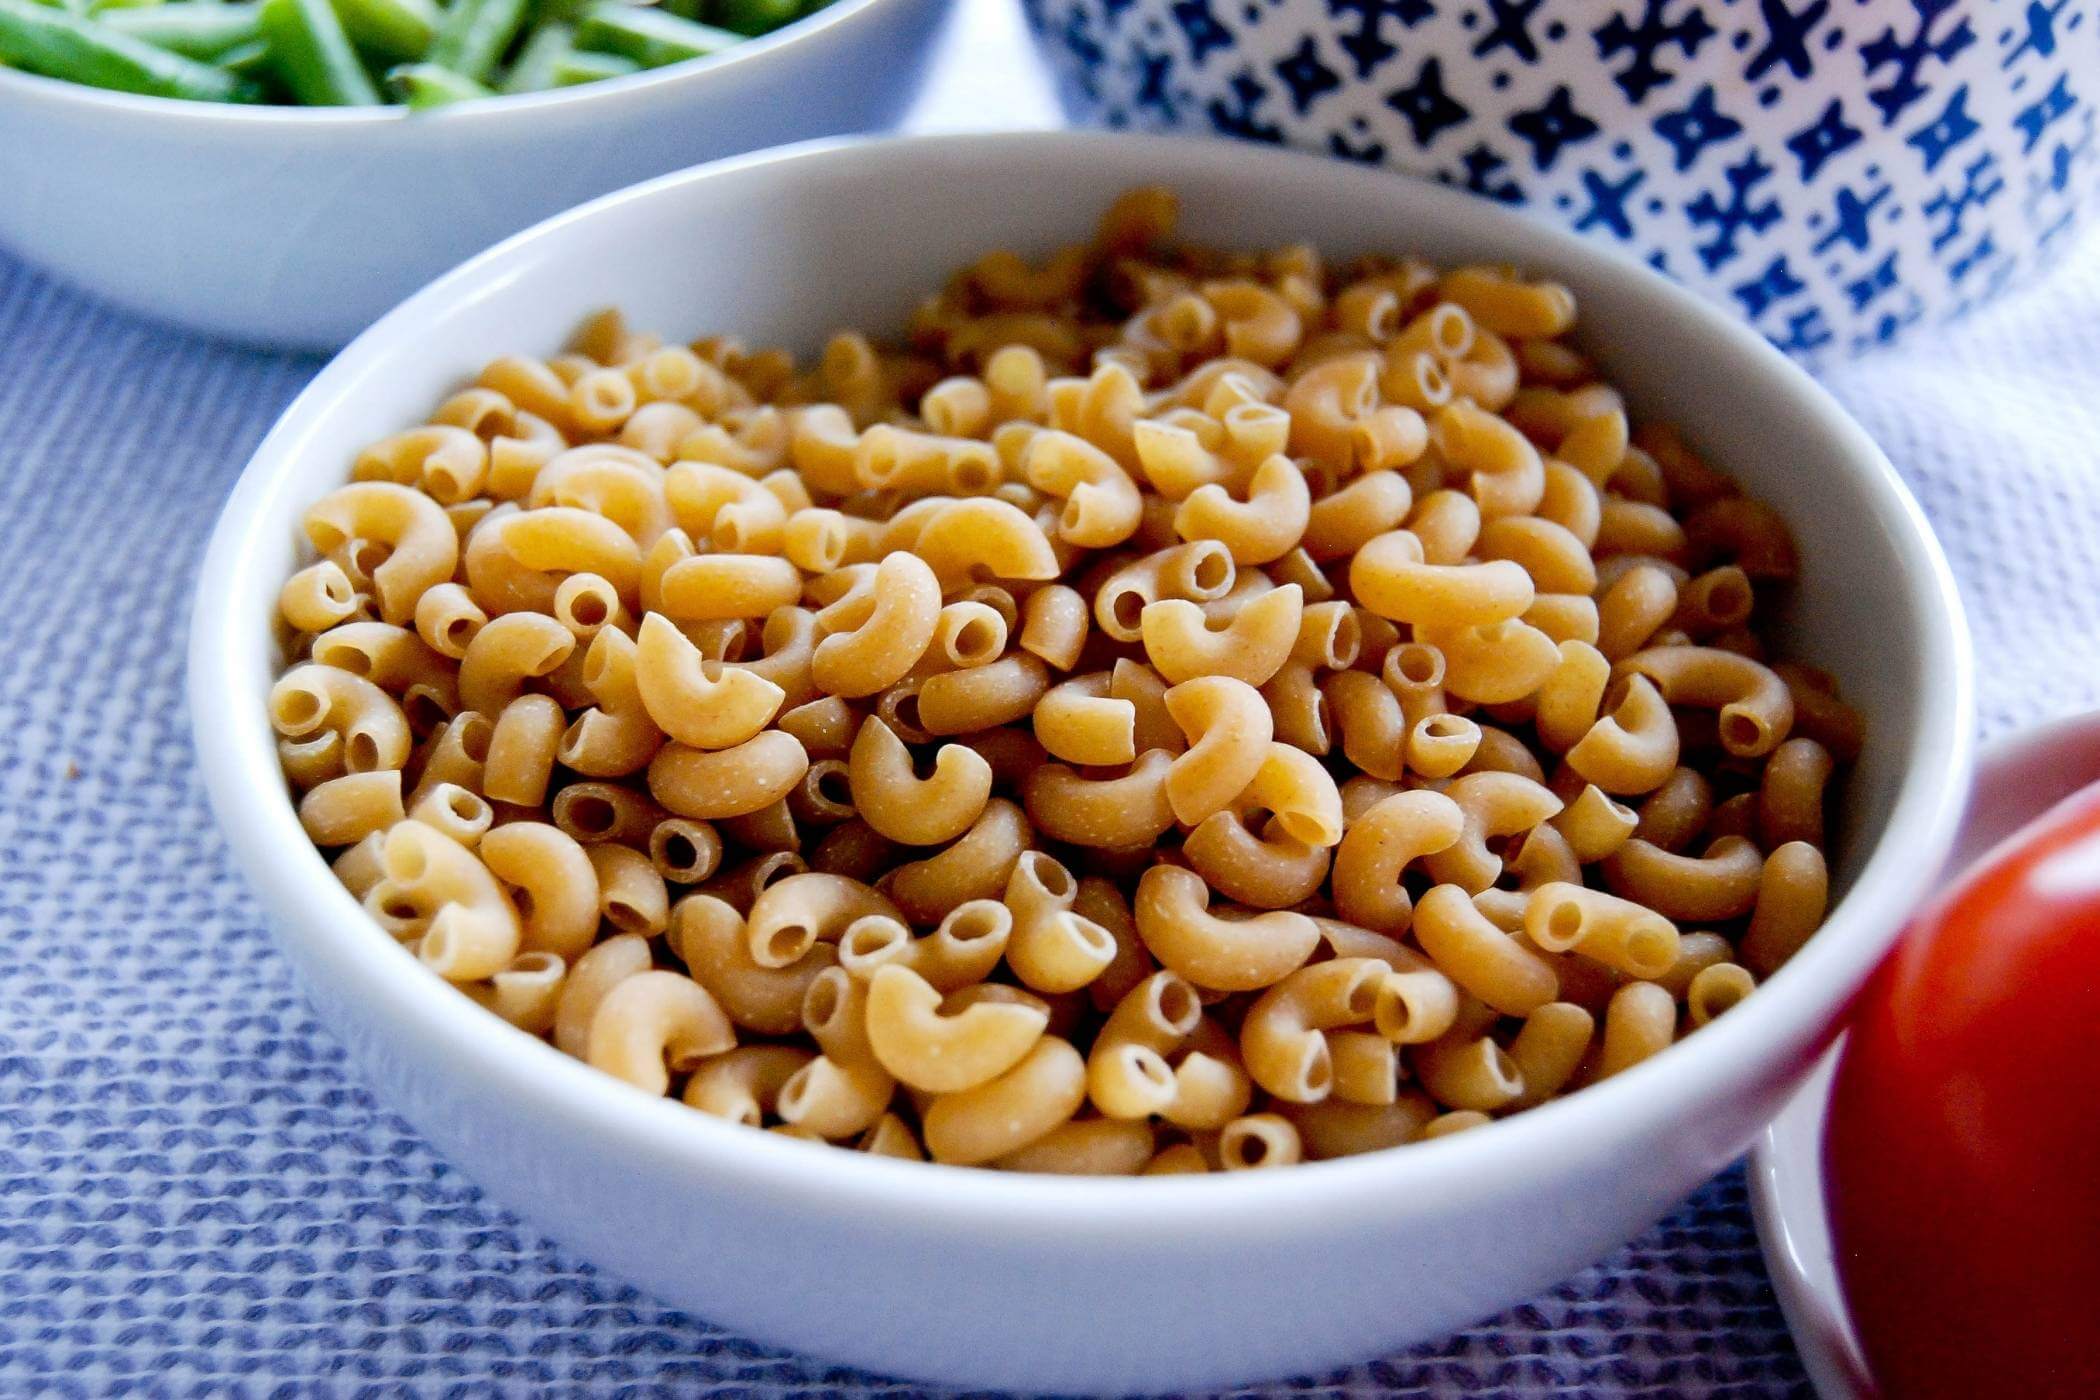 macaroni noodles in bowl.